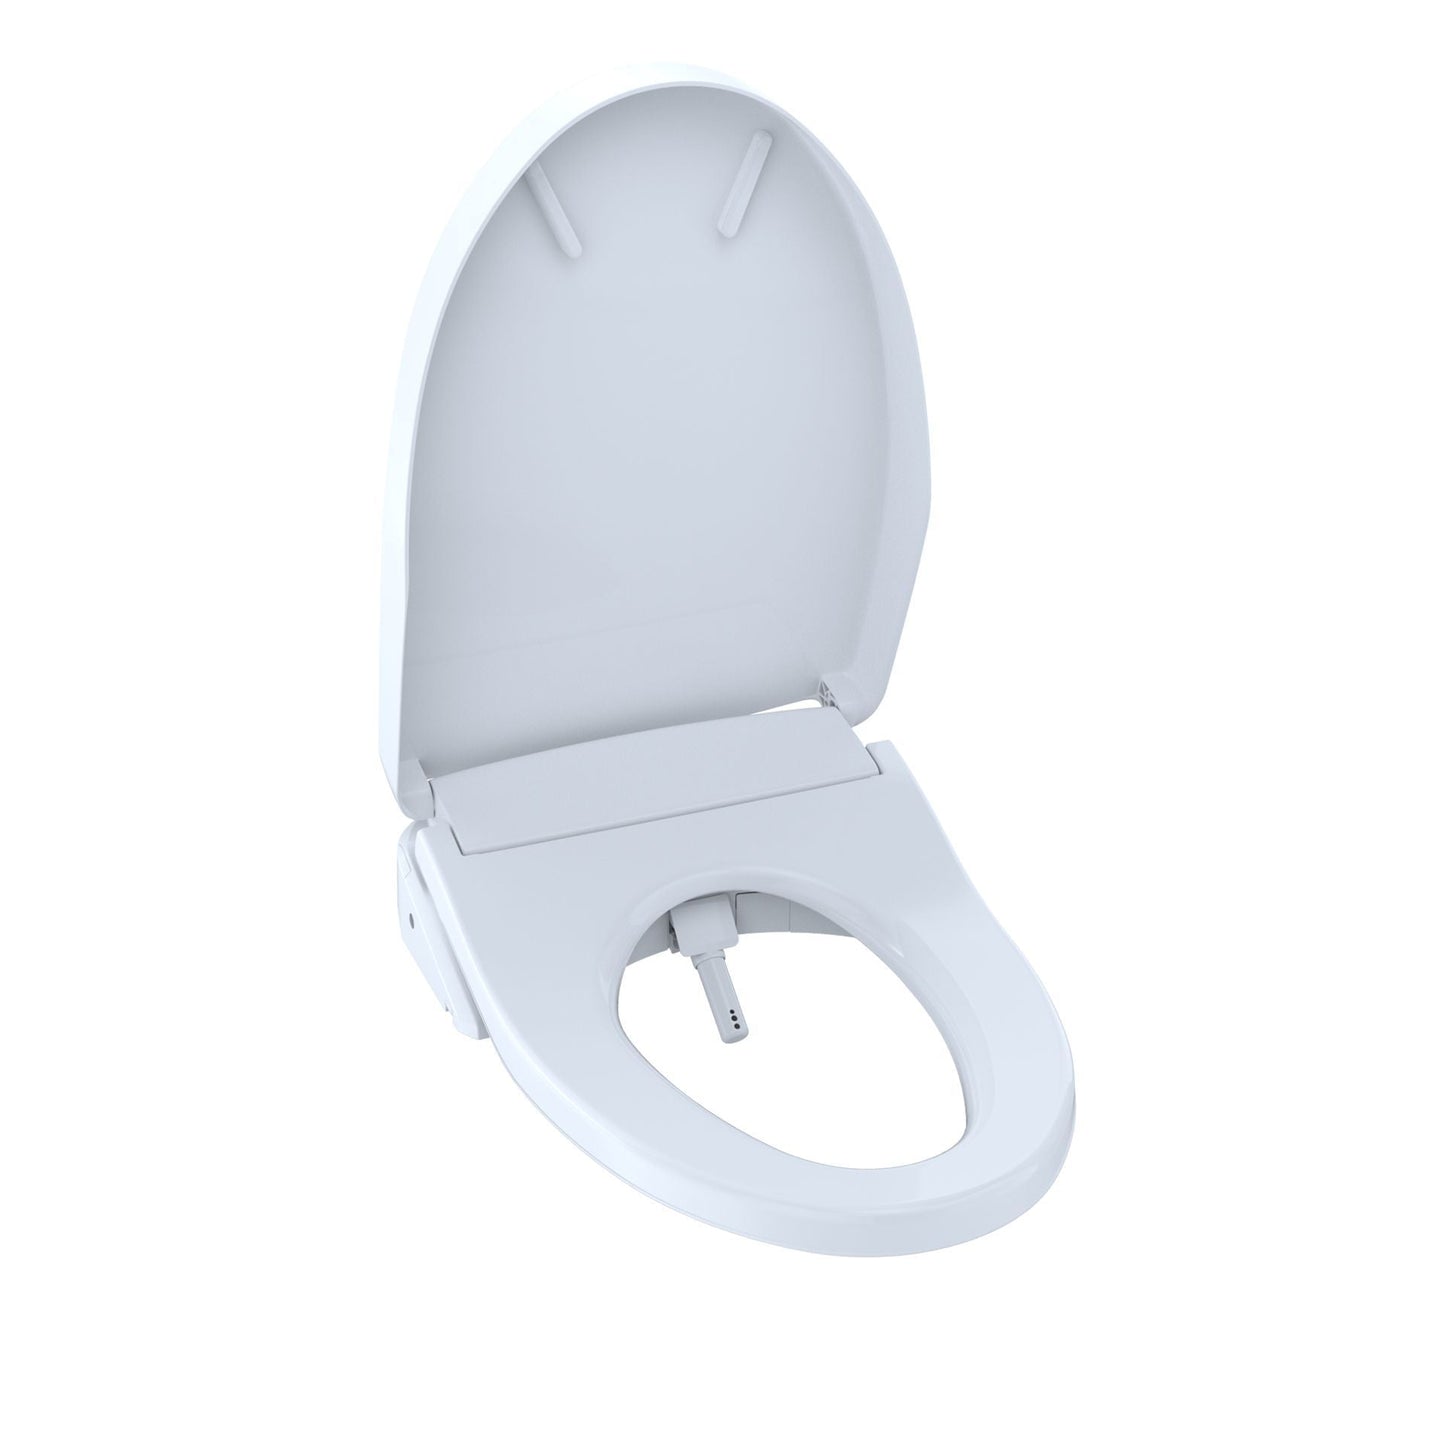 Washlet+® S550e Contemporary Bidet With EWATER+ - Elongated for Toto Washlet+ Toilets